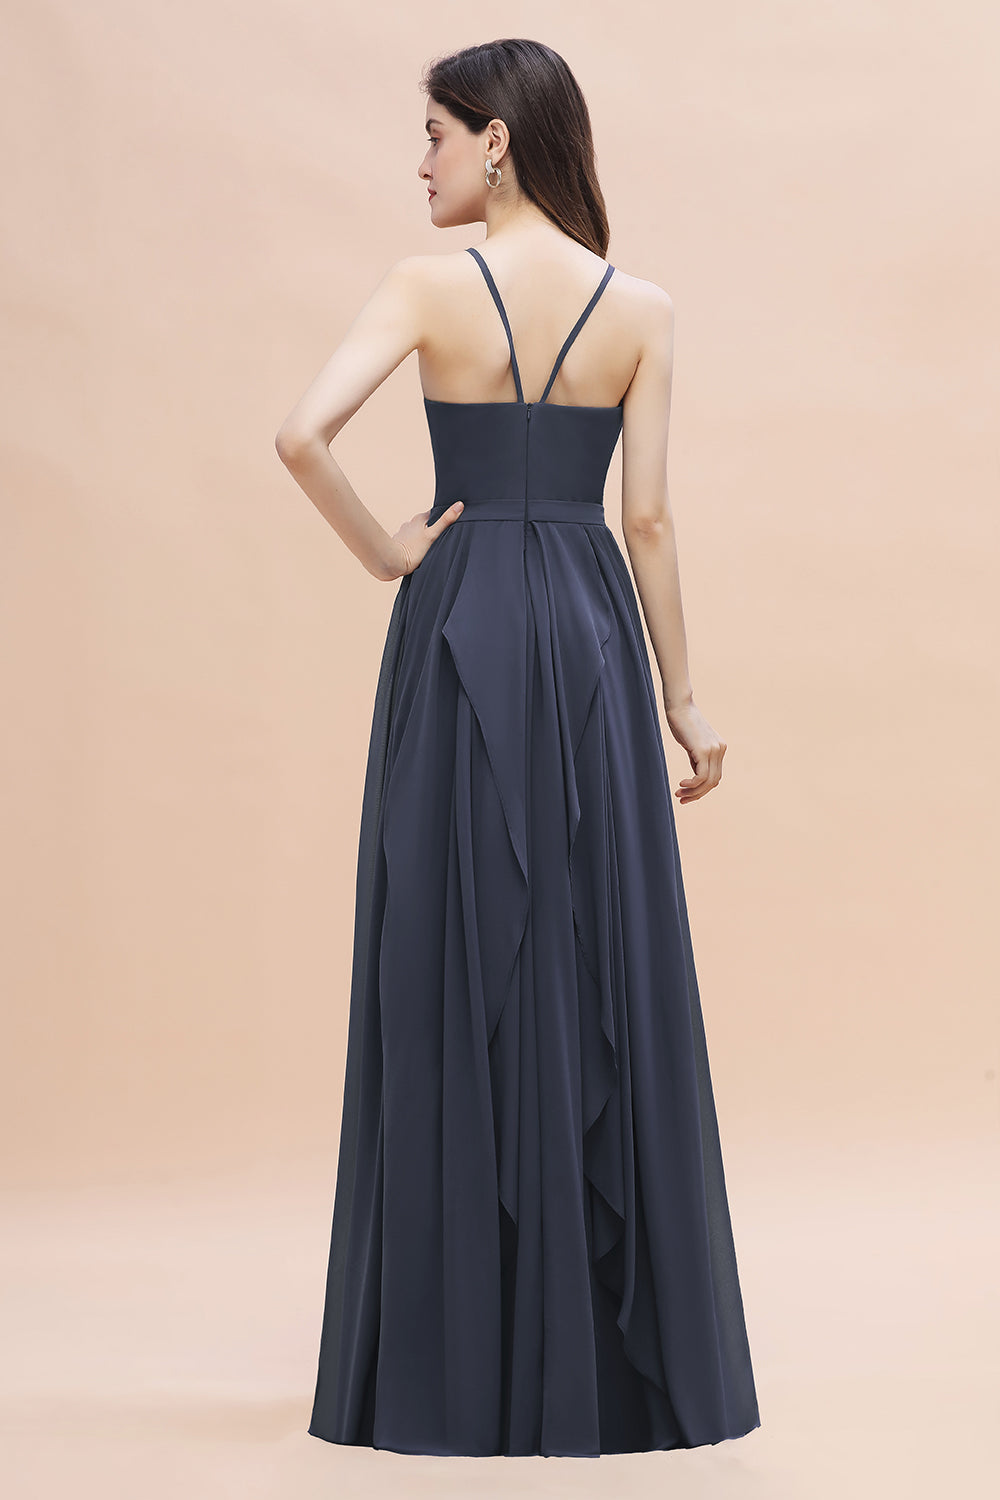 Affordable Jewel Sleeveless Stormy Chiffon Bridesmaid Dress with Ruffles Online-27dress